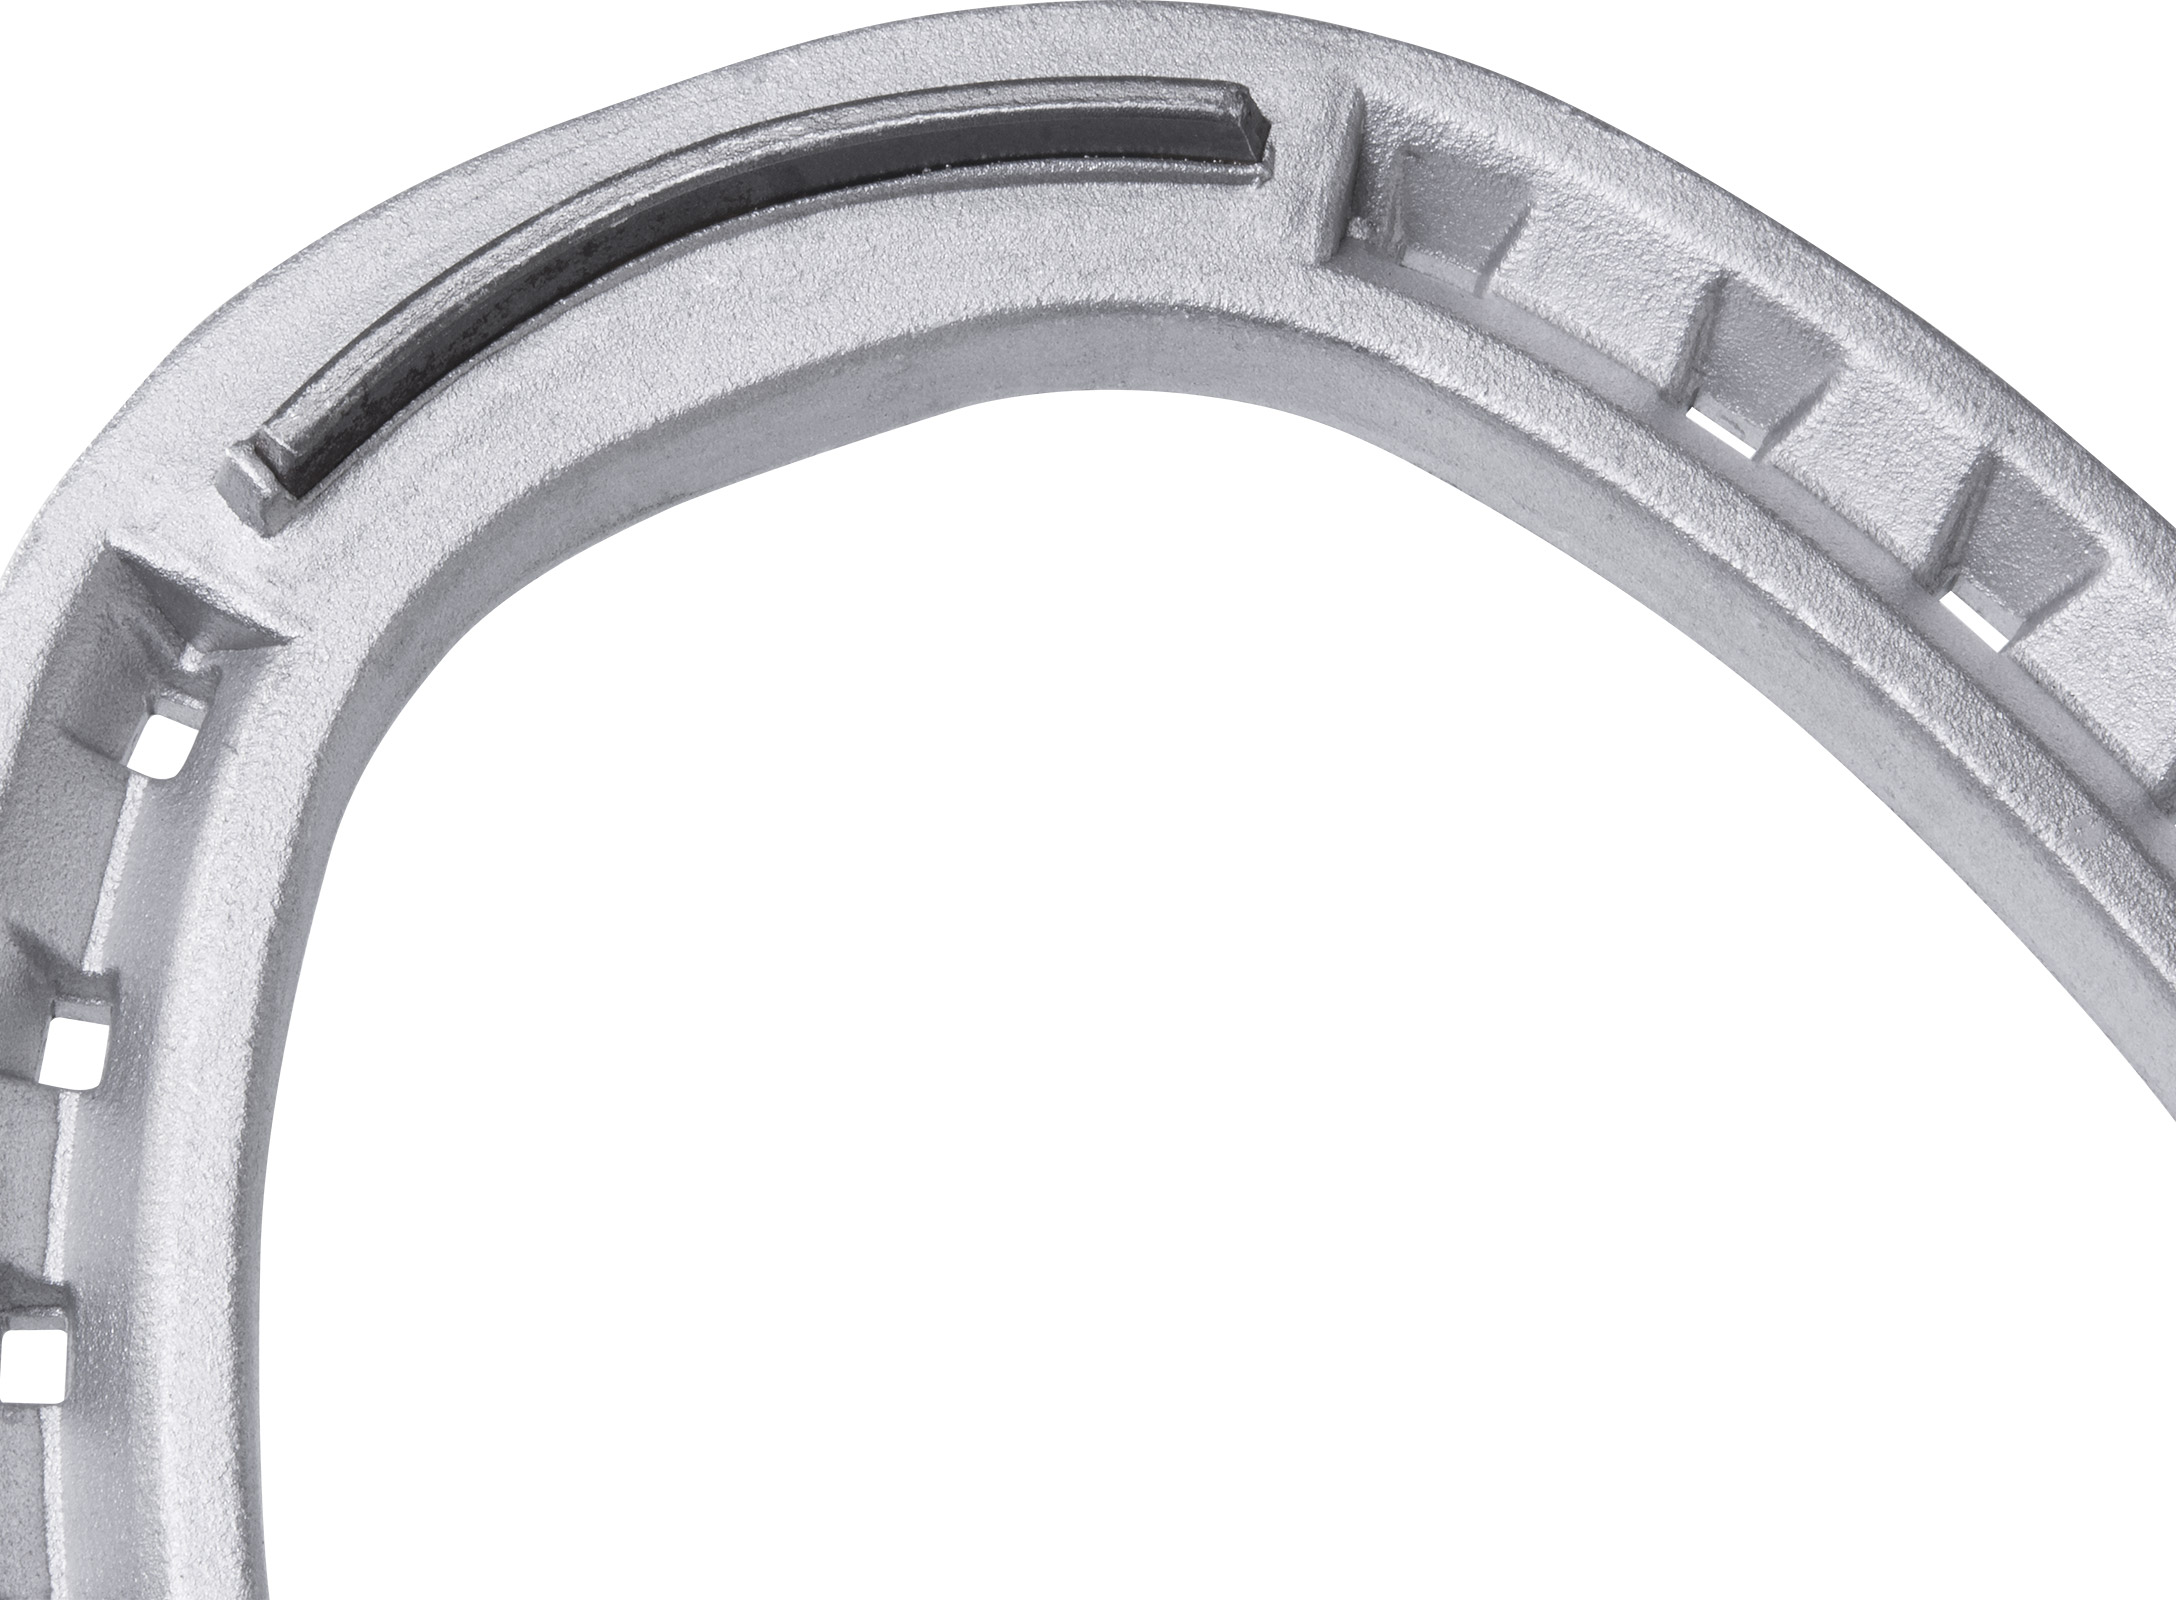 St. Croix Fullered Aluminium Toe Grab 3mm horsesehoe, detail